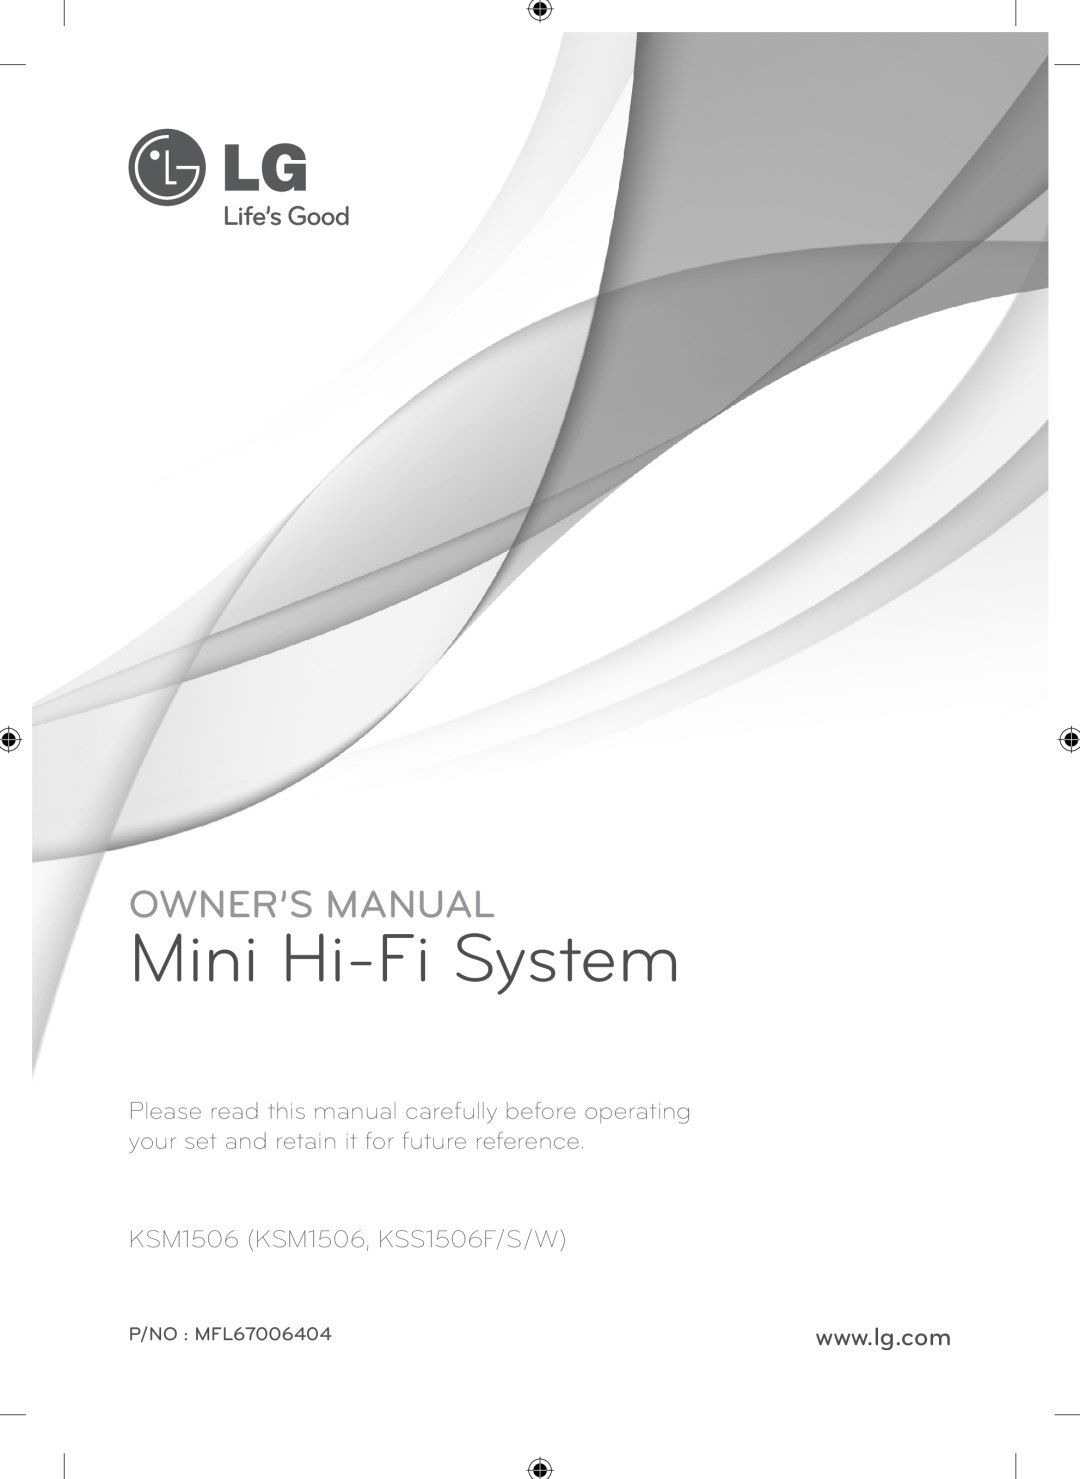 LG Electronics owner manual Mini Hi-FiSystem, KSM1506 KSM1506, KSS1506F/S/W, P/NO MFL67006404 